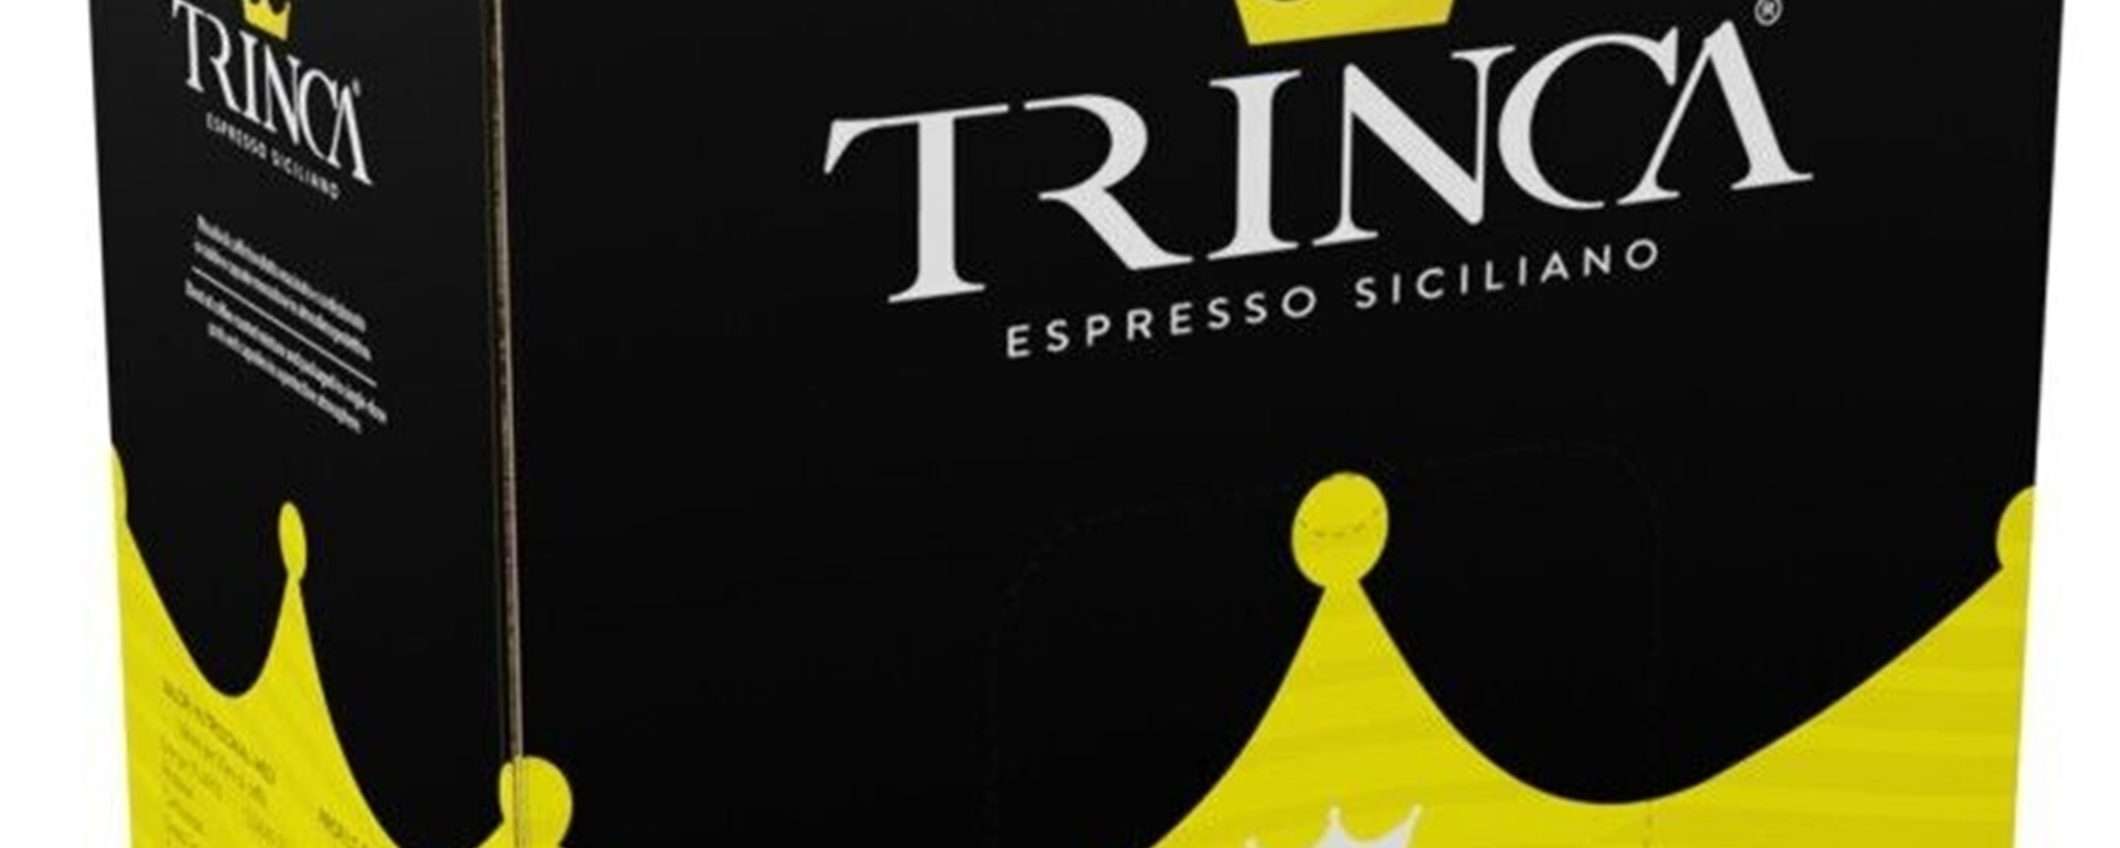 200 cialde caffè Trinca Gold per A Modo Mio a soli 14cent ciascuna!